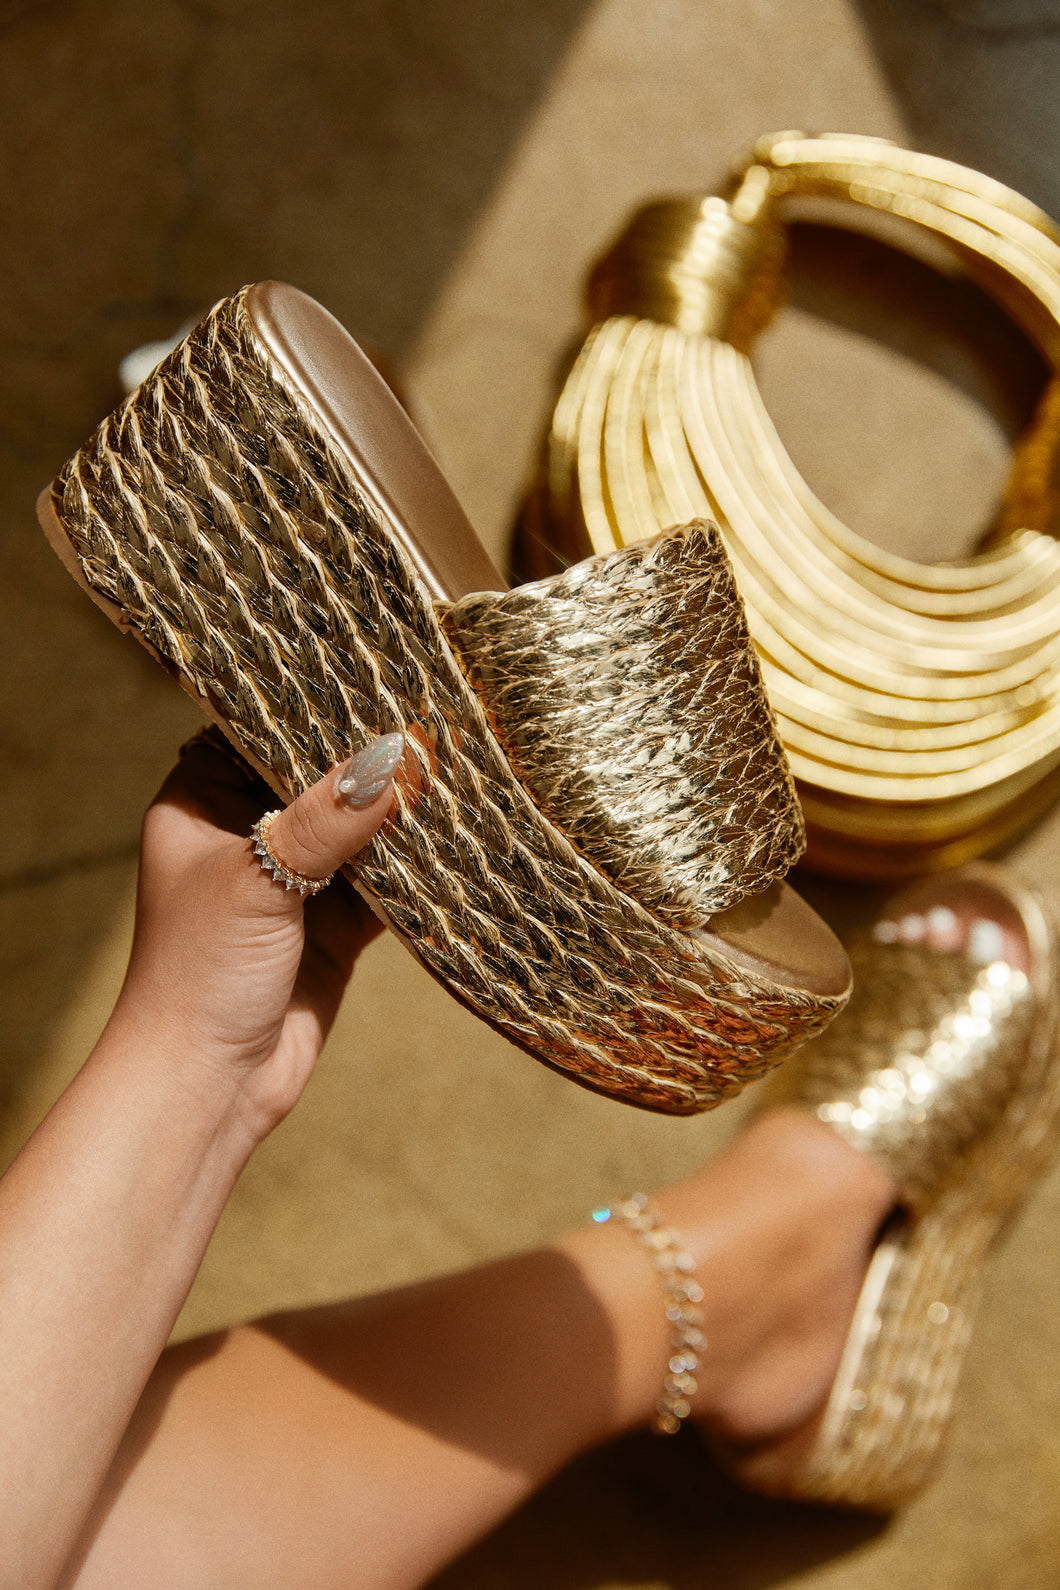 Women Holding Gold Espadrille Sandals